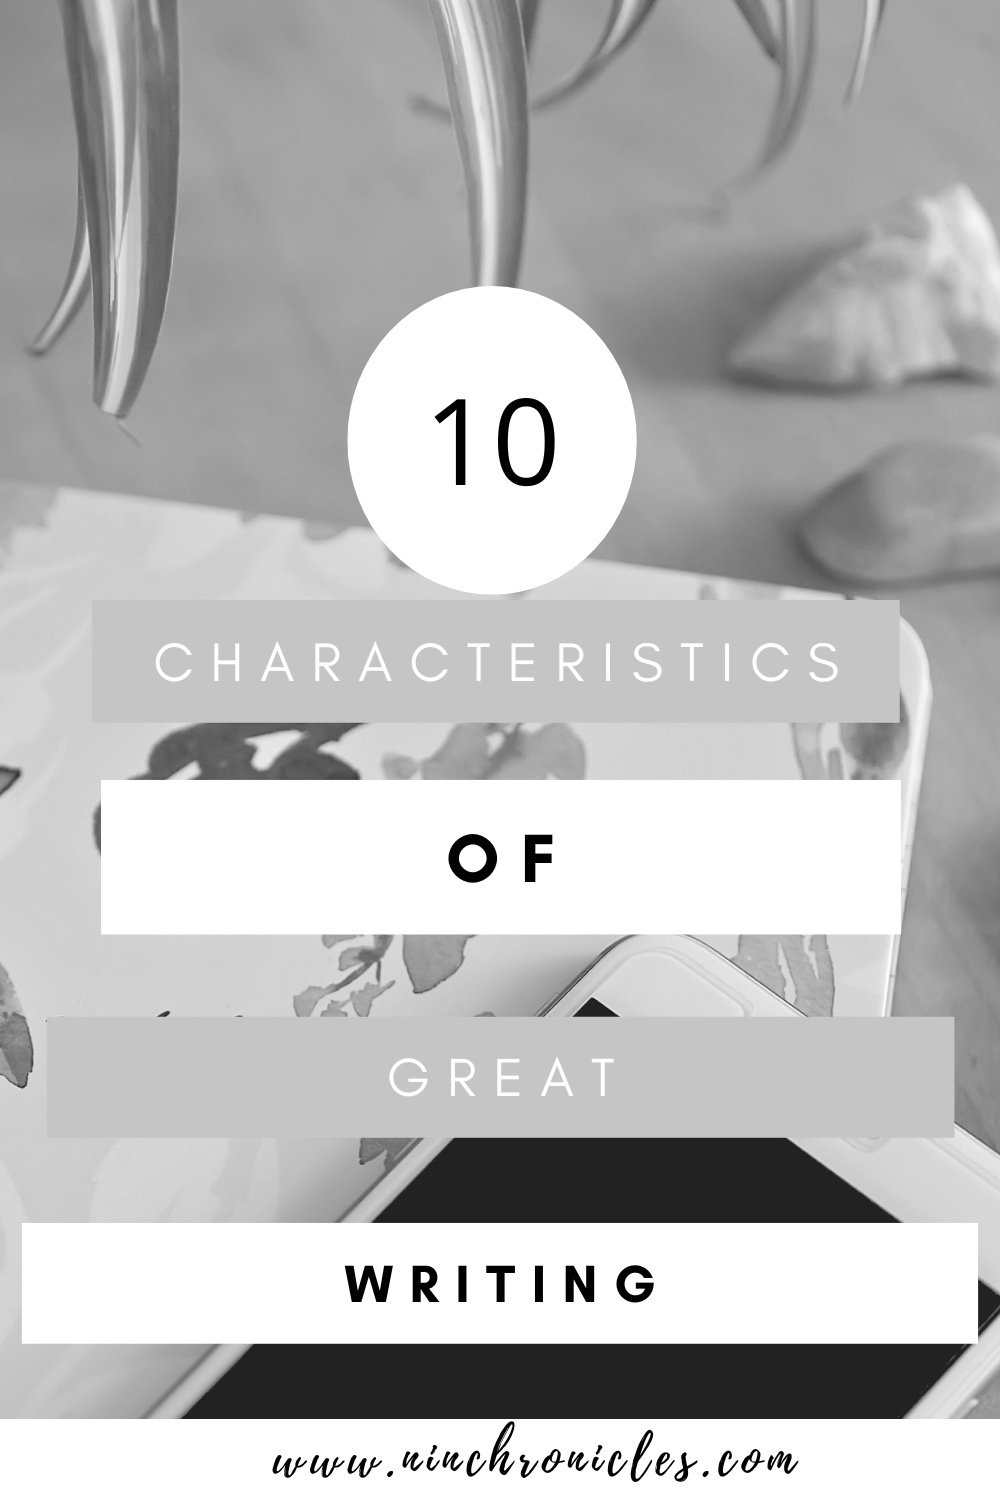 10 Characteristics of Great Writing